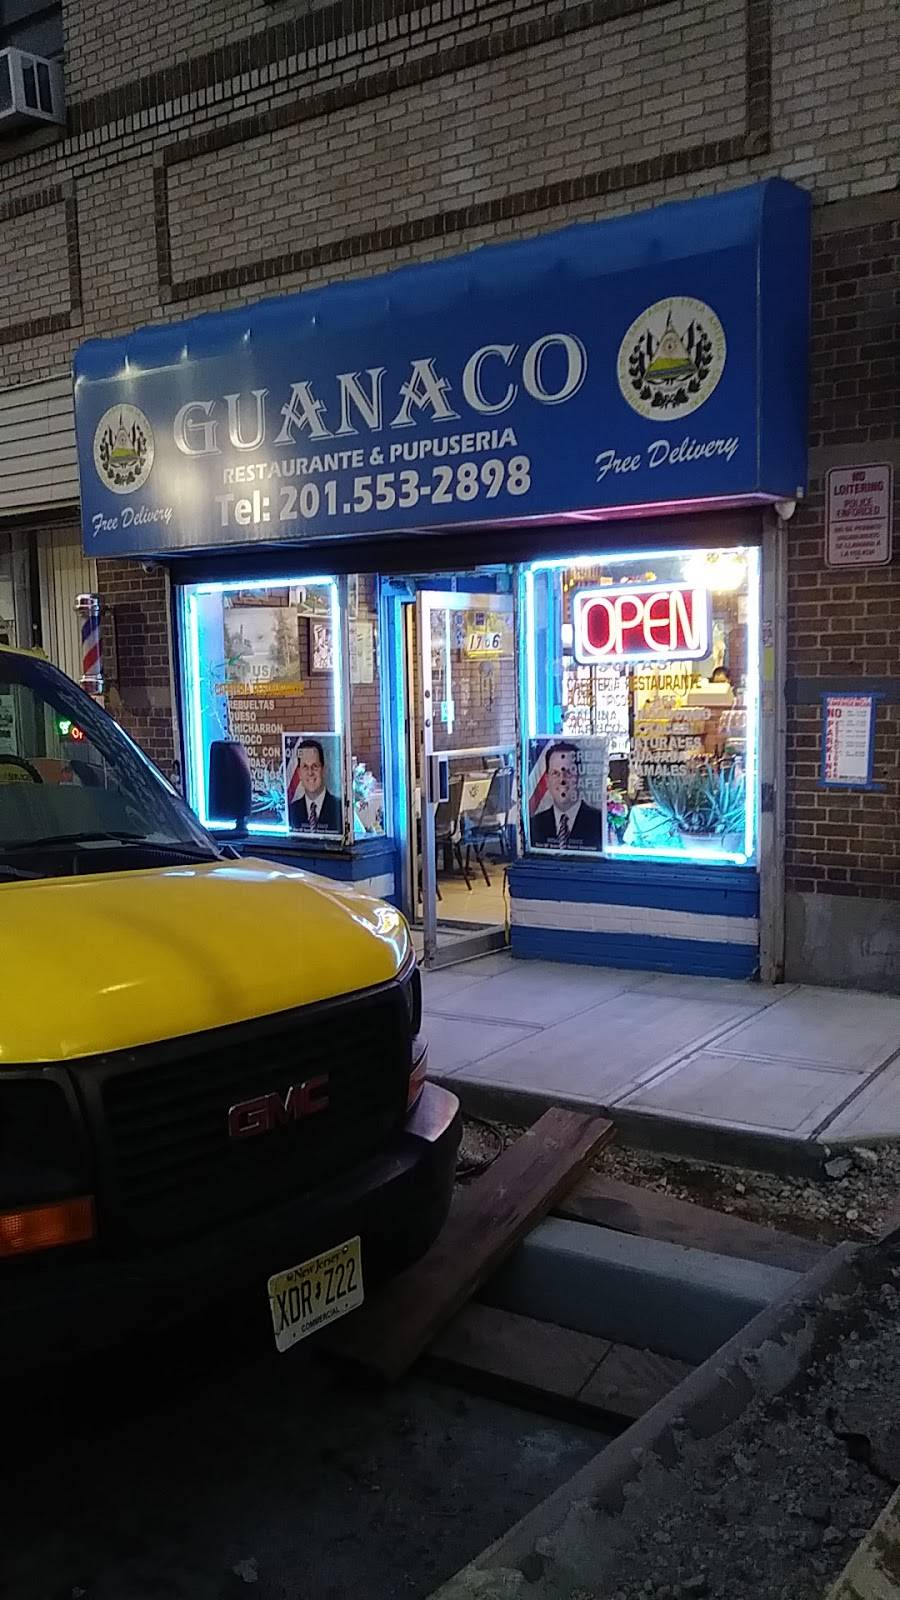 Guanaco | restaurant | 1706 Bergenline Ave, Union City, NJ 07087, USA | 2015532898 OR +1 201-553-2898